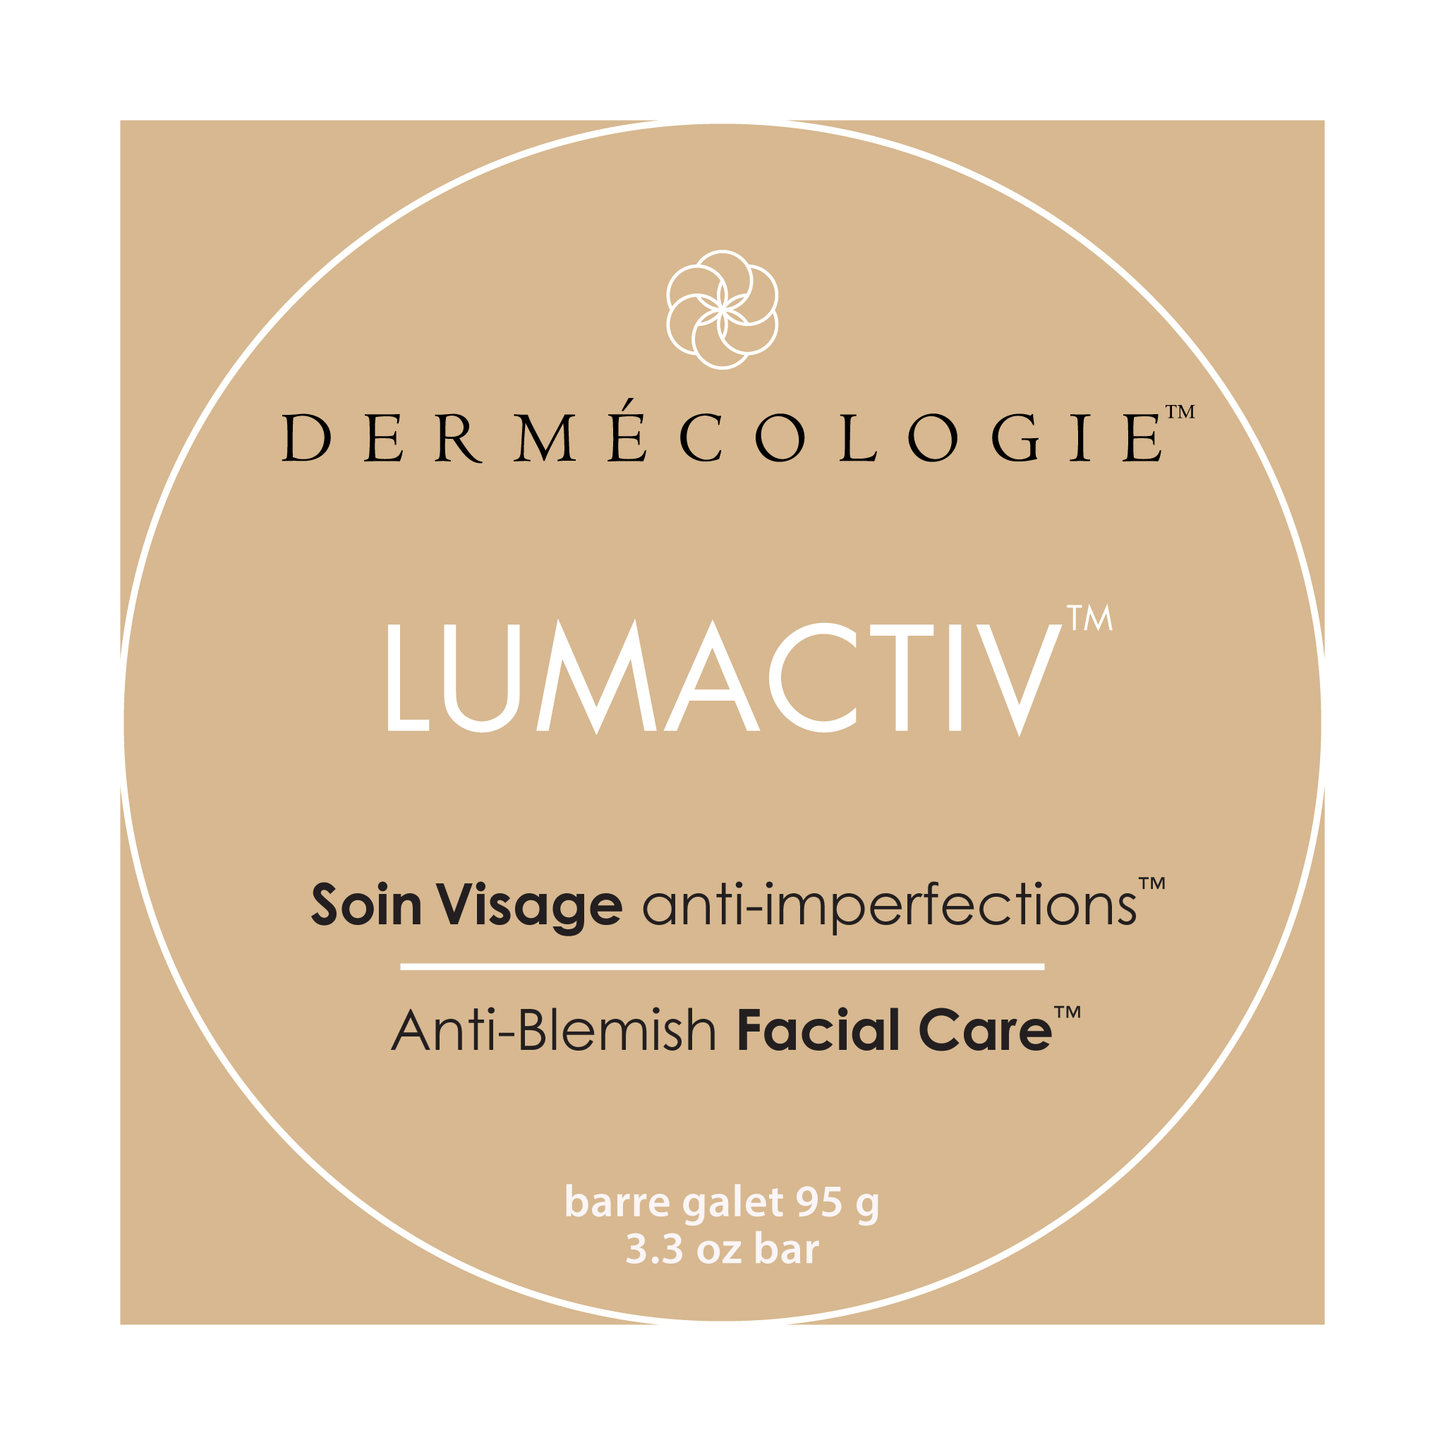 LUMACTIV™ Blemish-Free 
Complete Facial Care™
Large Size - 95g 3.3oz bar